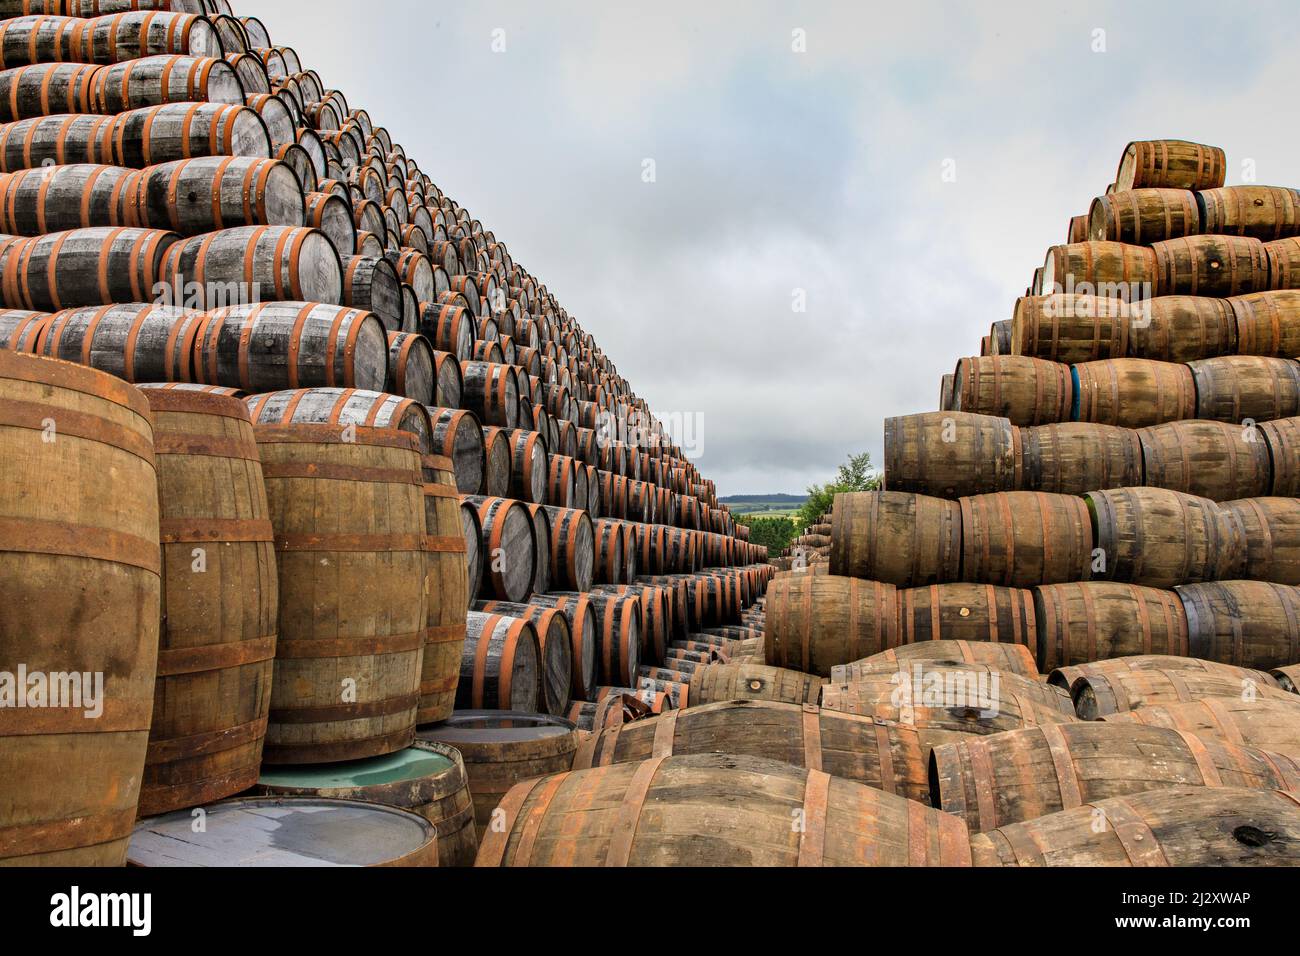 Barrel mountains, pyramids of used whiskey barrels before processing, Speyside Cooperage, Craigellachie, Scotland UK Stock Photo